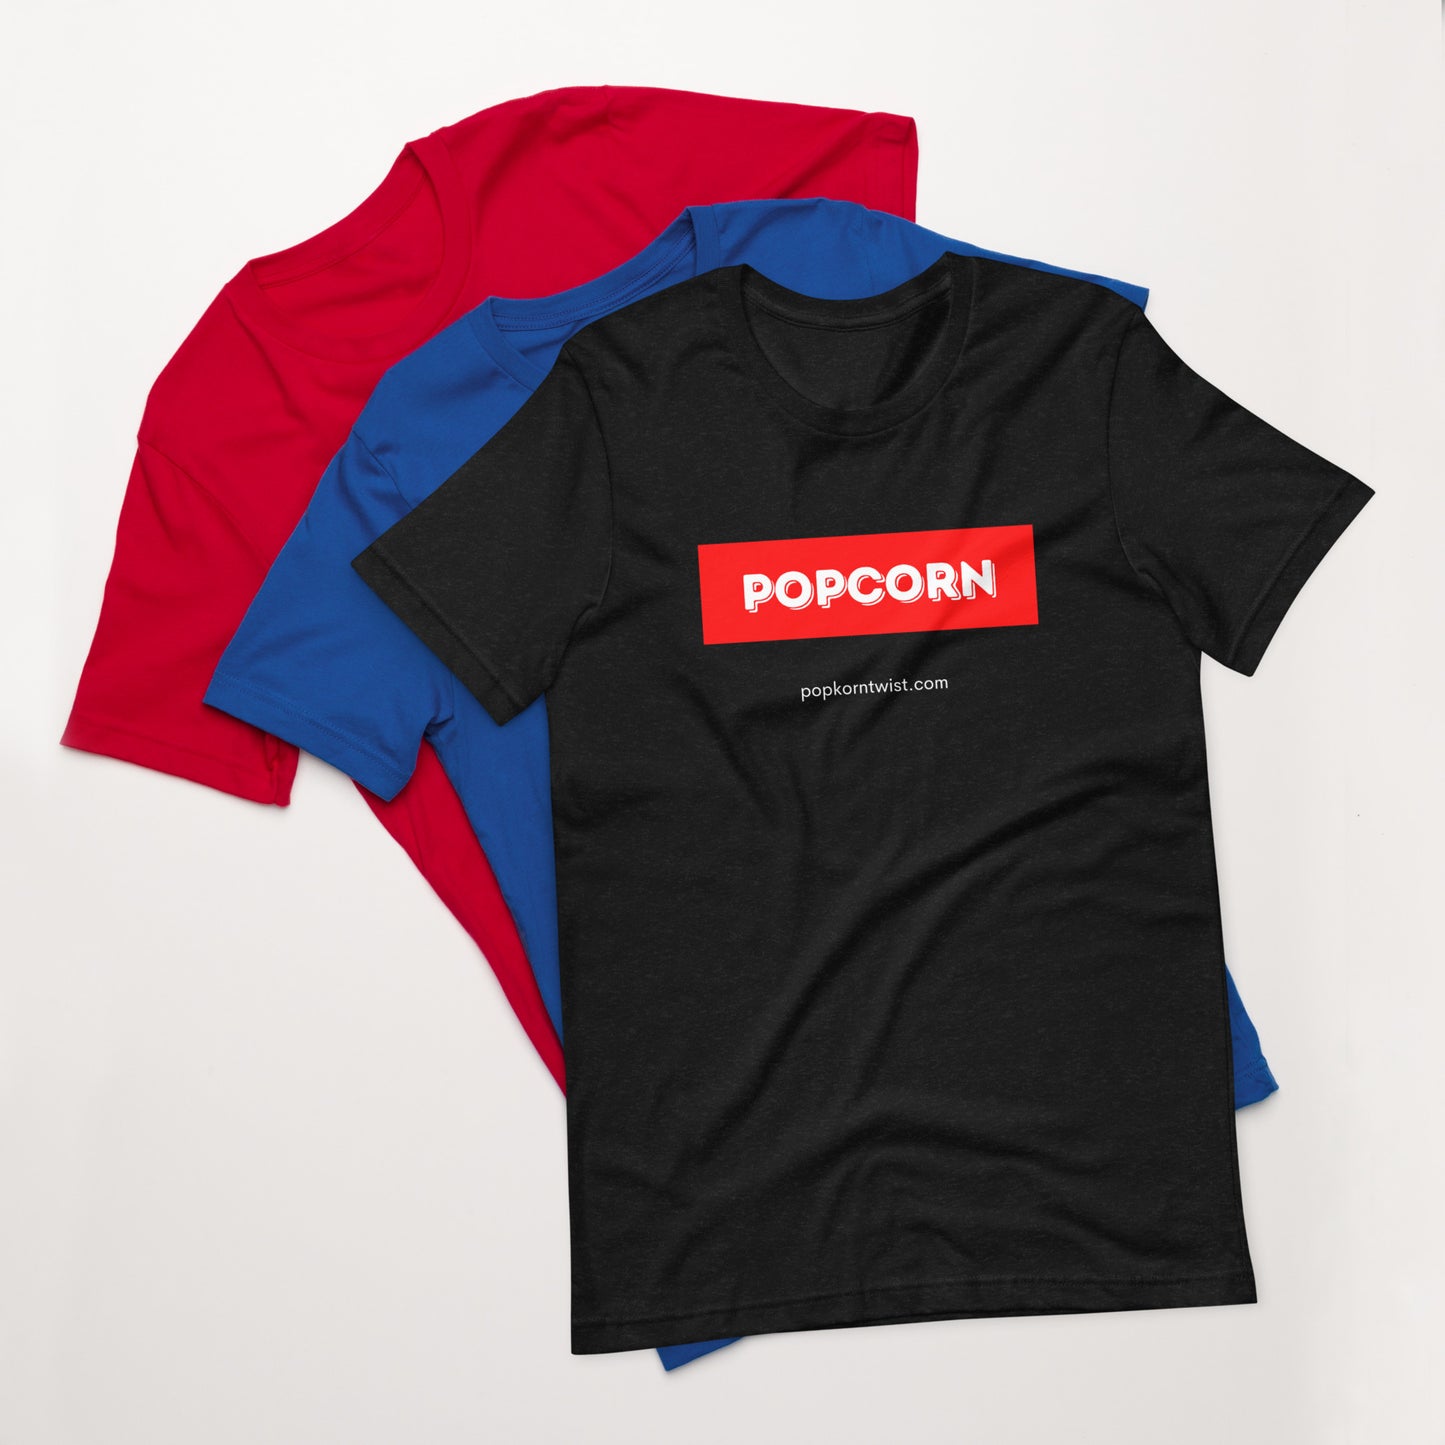 T-shirt - Popcorn (word) T-Shirt